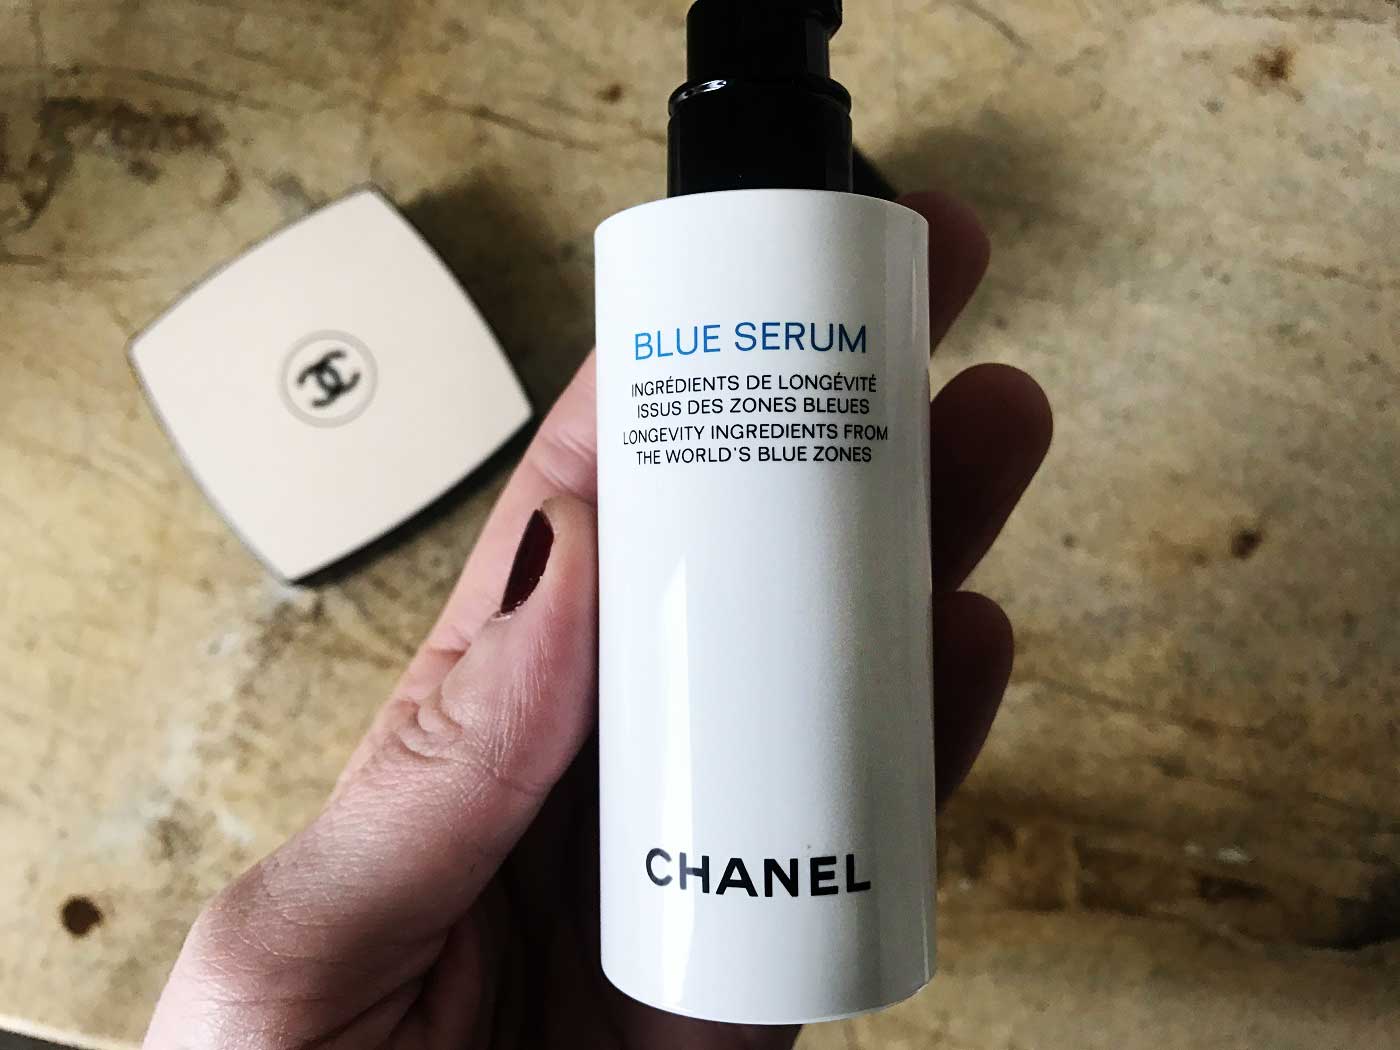 Redakcja testuje: nowe Blue serum marki Chanel!